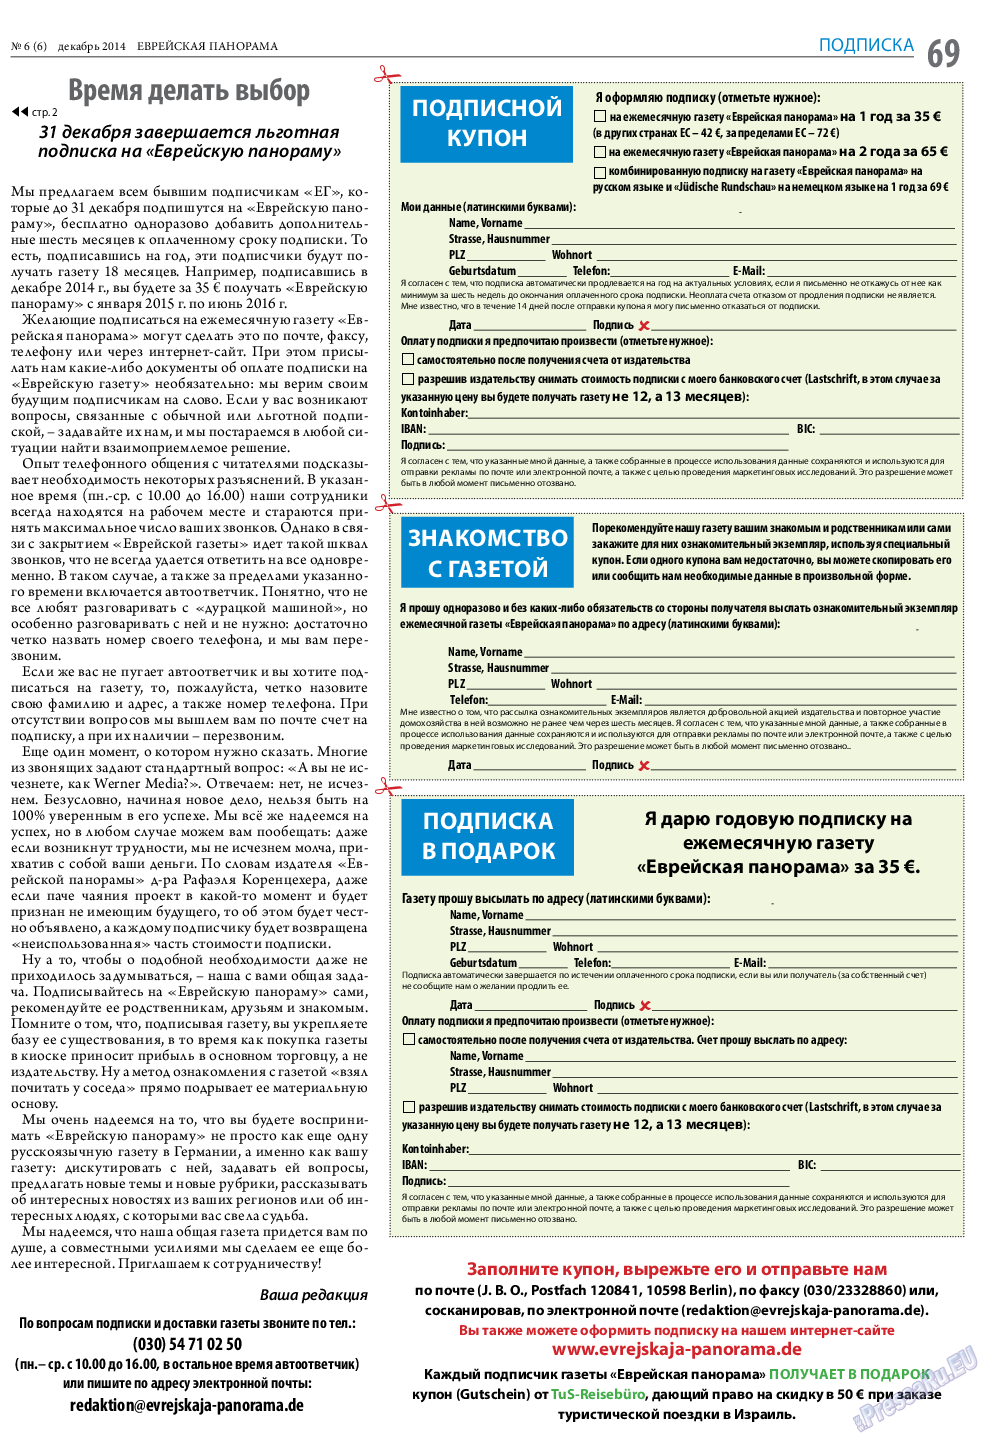 Еврейская панорама, газета. 2014 №6 стр.69